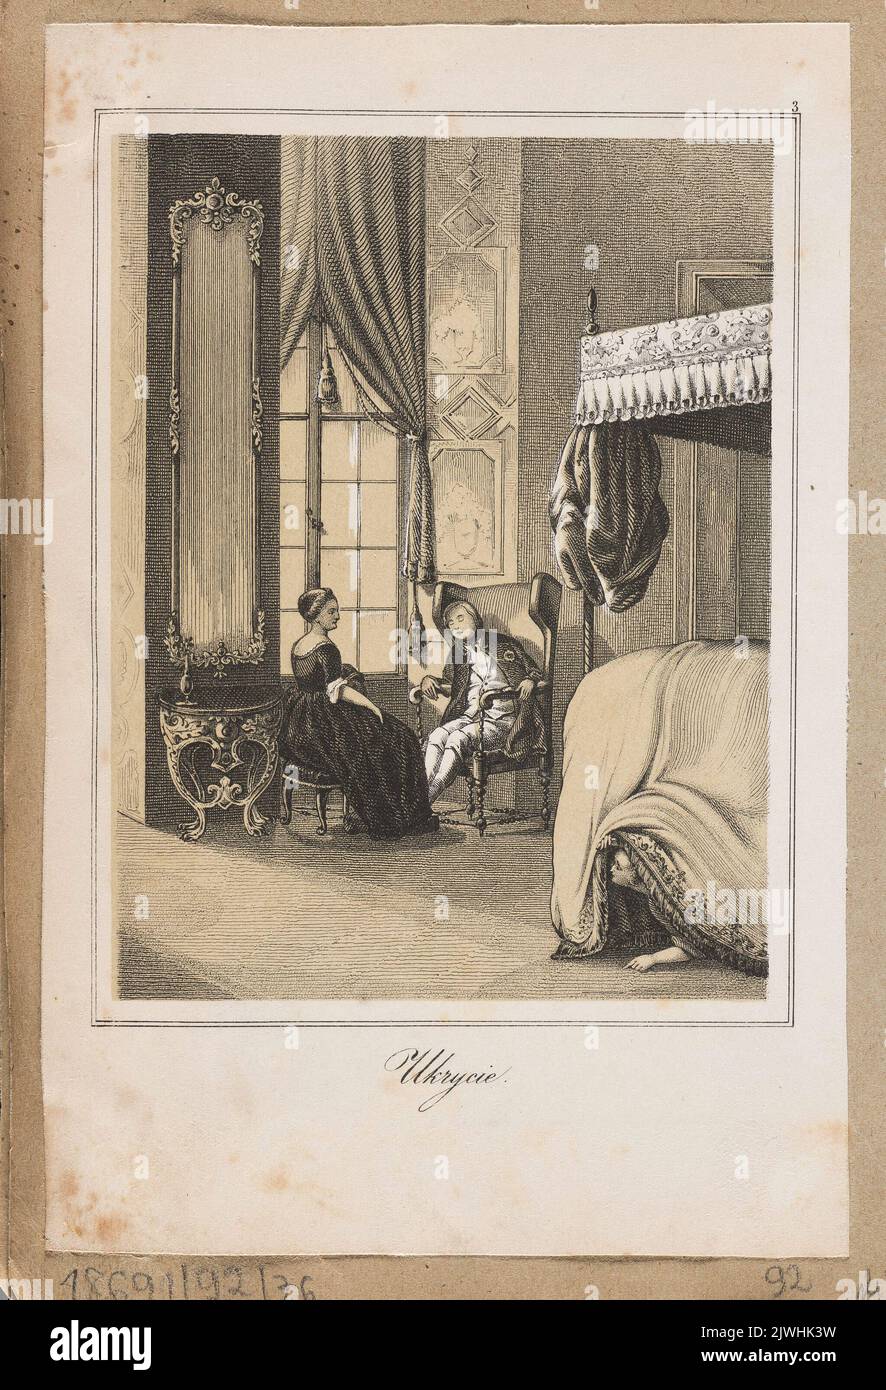 Nascondere il luogo. Orgelbrand, Samuel (Warszawa; wydawnictwo, drukarnia; fl. 1836-1919), datore di lavoro mercantile, Koenig (König) Fr., grafico Foto Stock